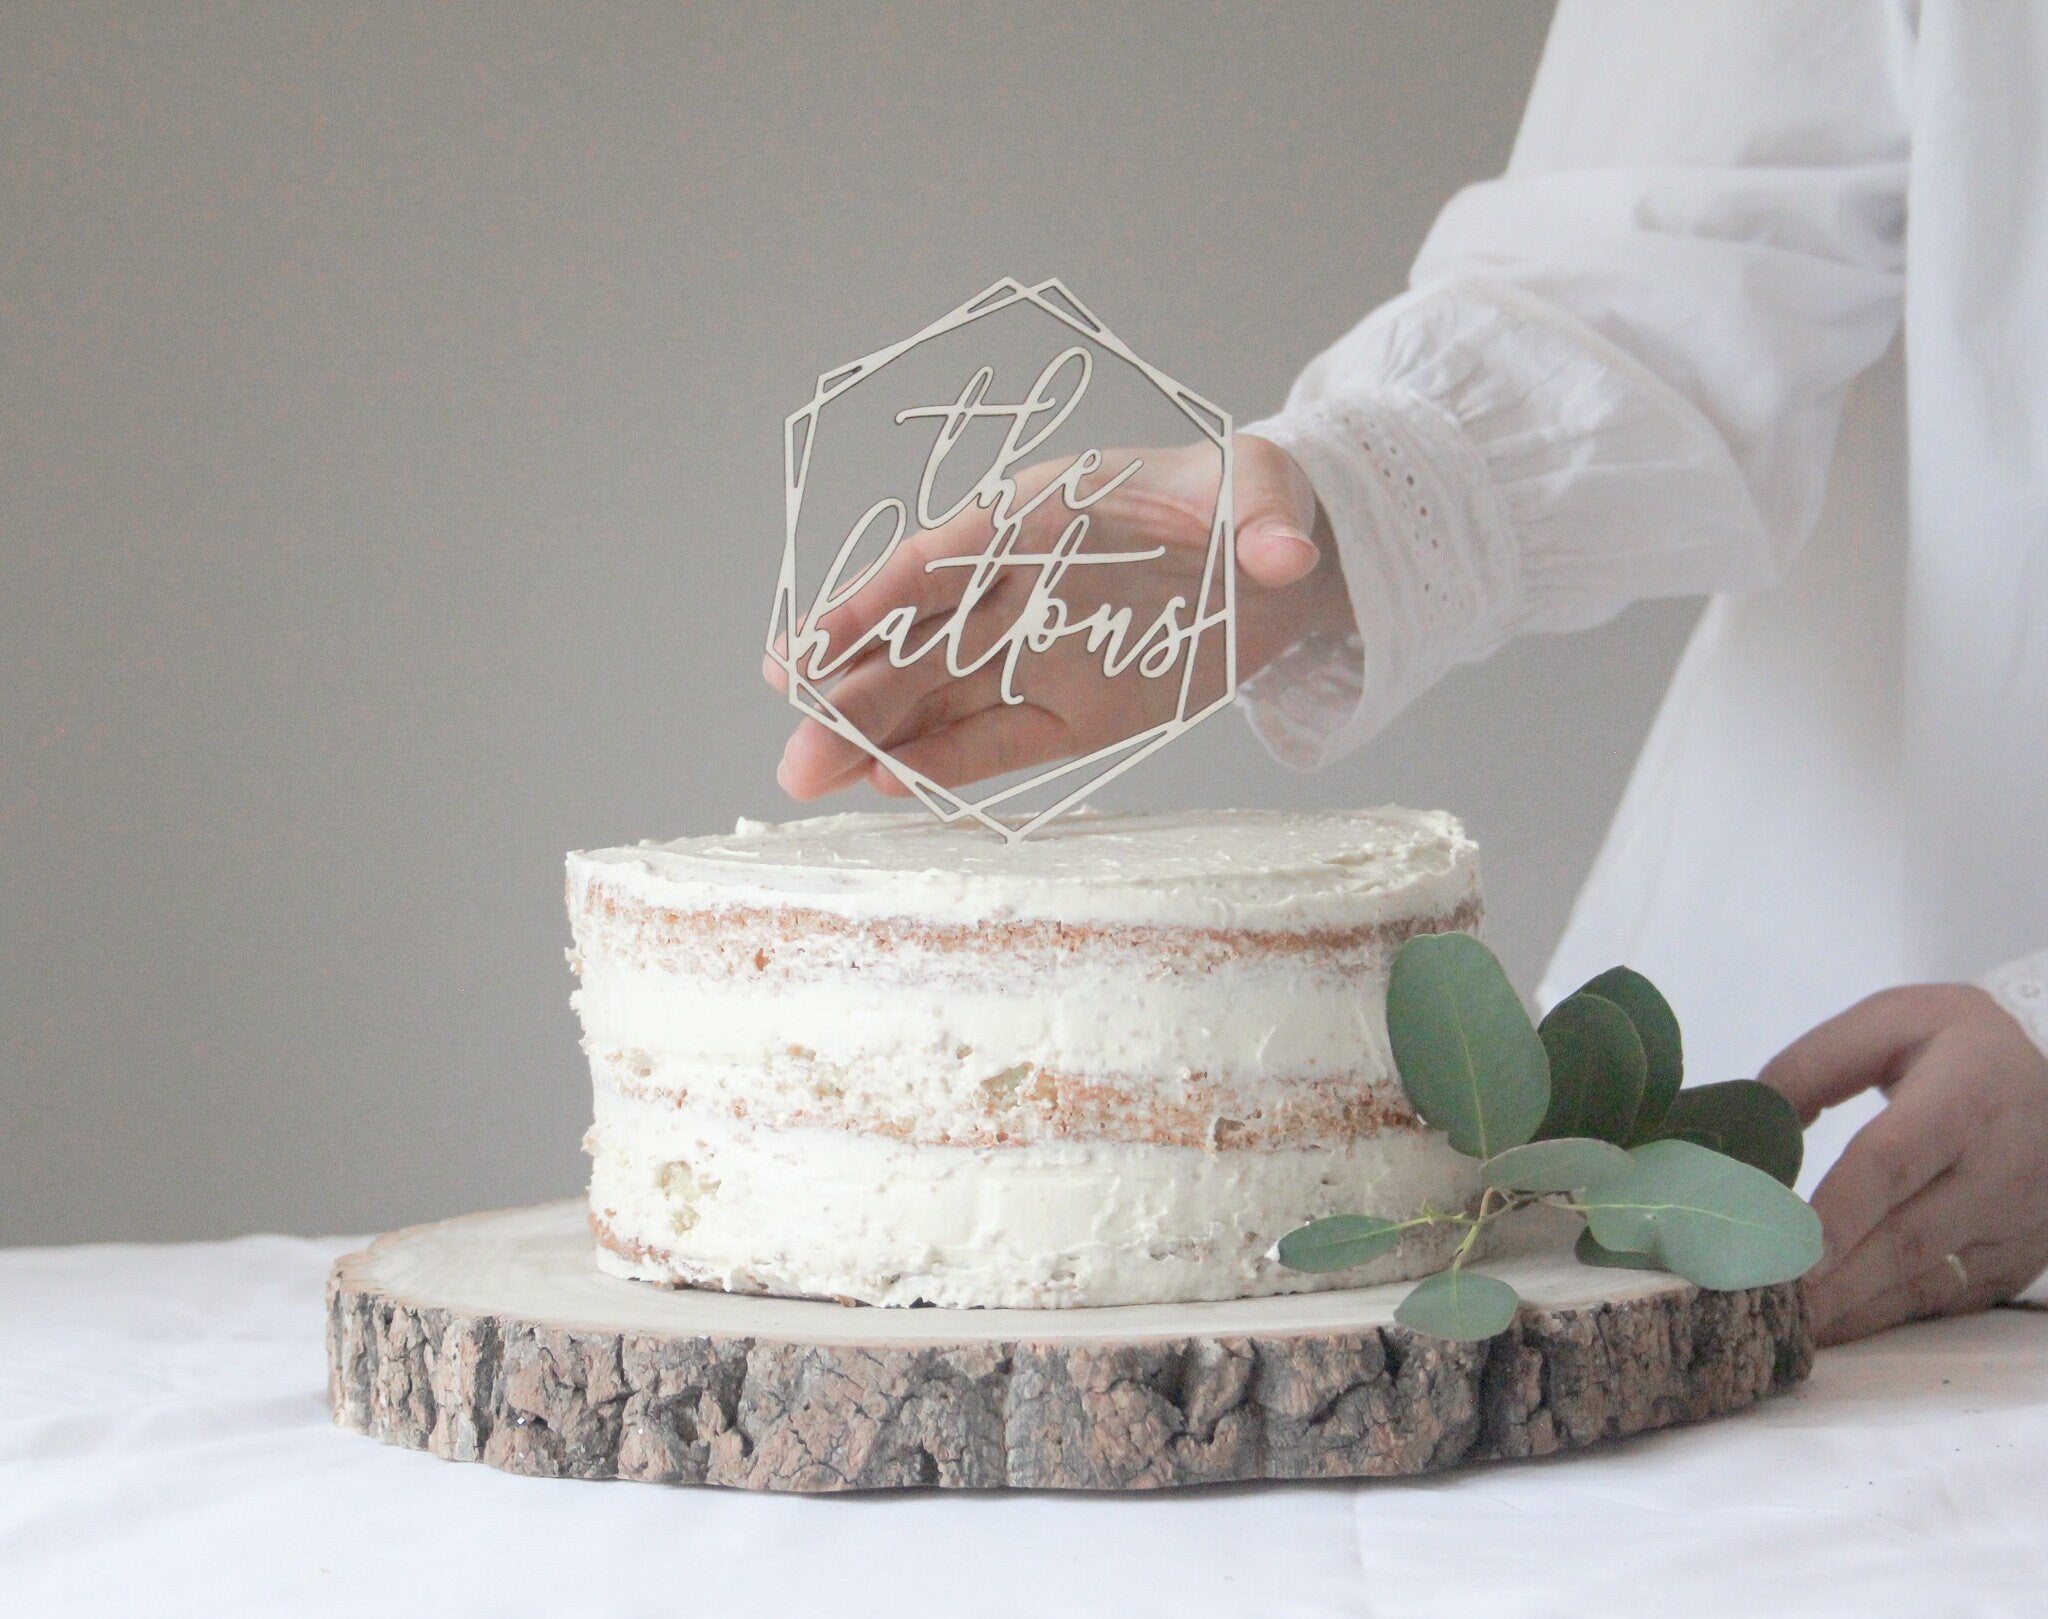 Surname Wedding Cake Topper, Minimal Wedding Cake Topper